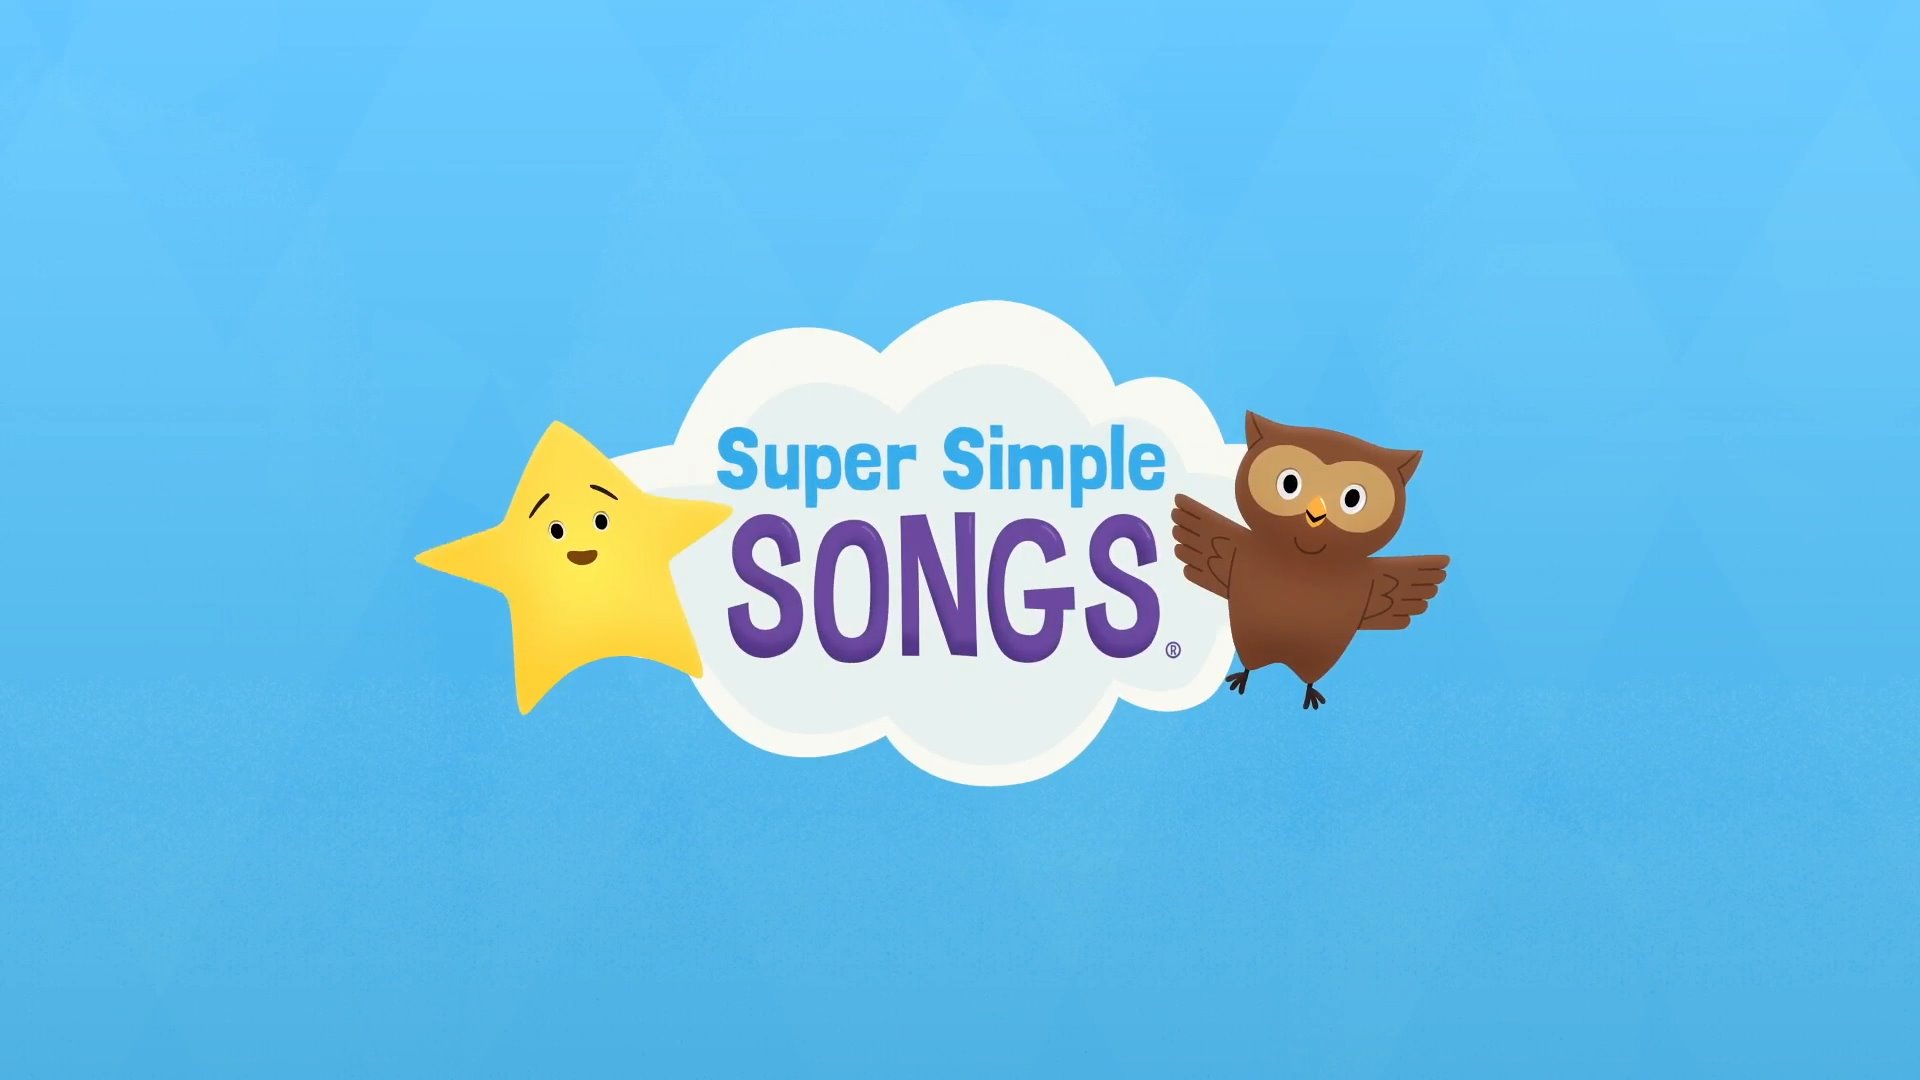 Simple english songs. Симпл Сонг. Супер Симпл Сонгс. Super simple Songs. Super simple Songs Kids Songs.